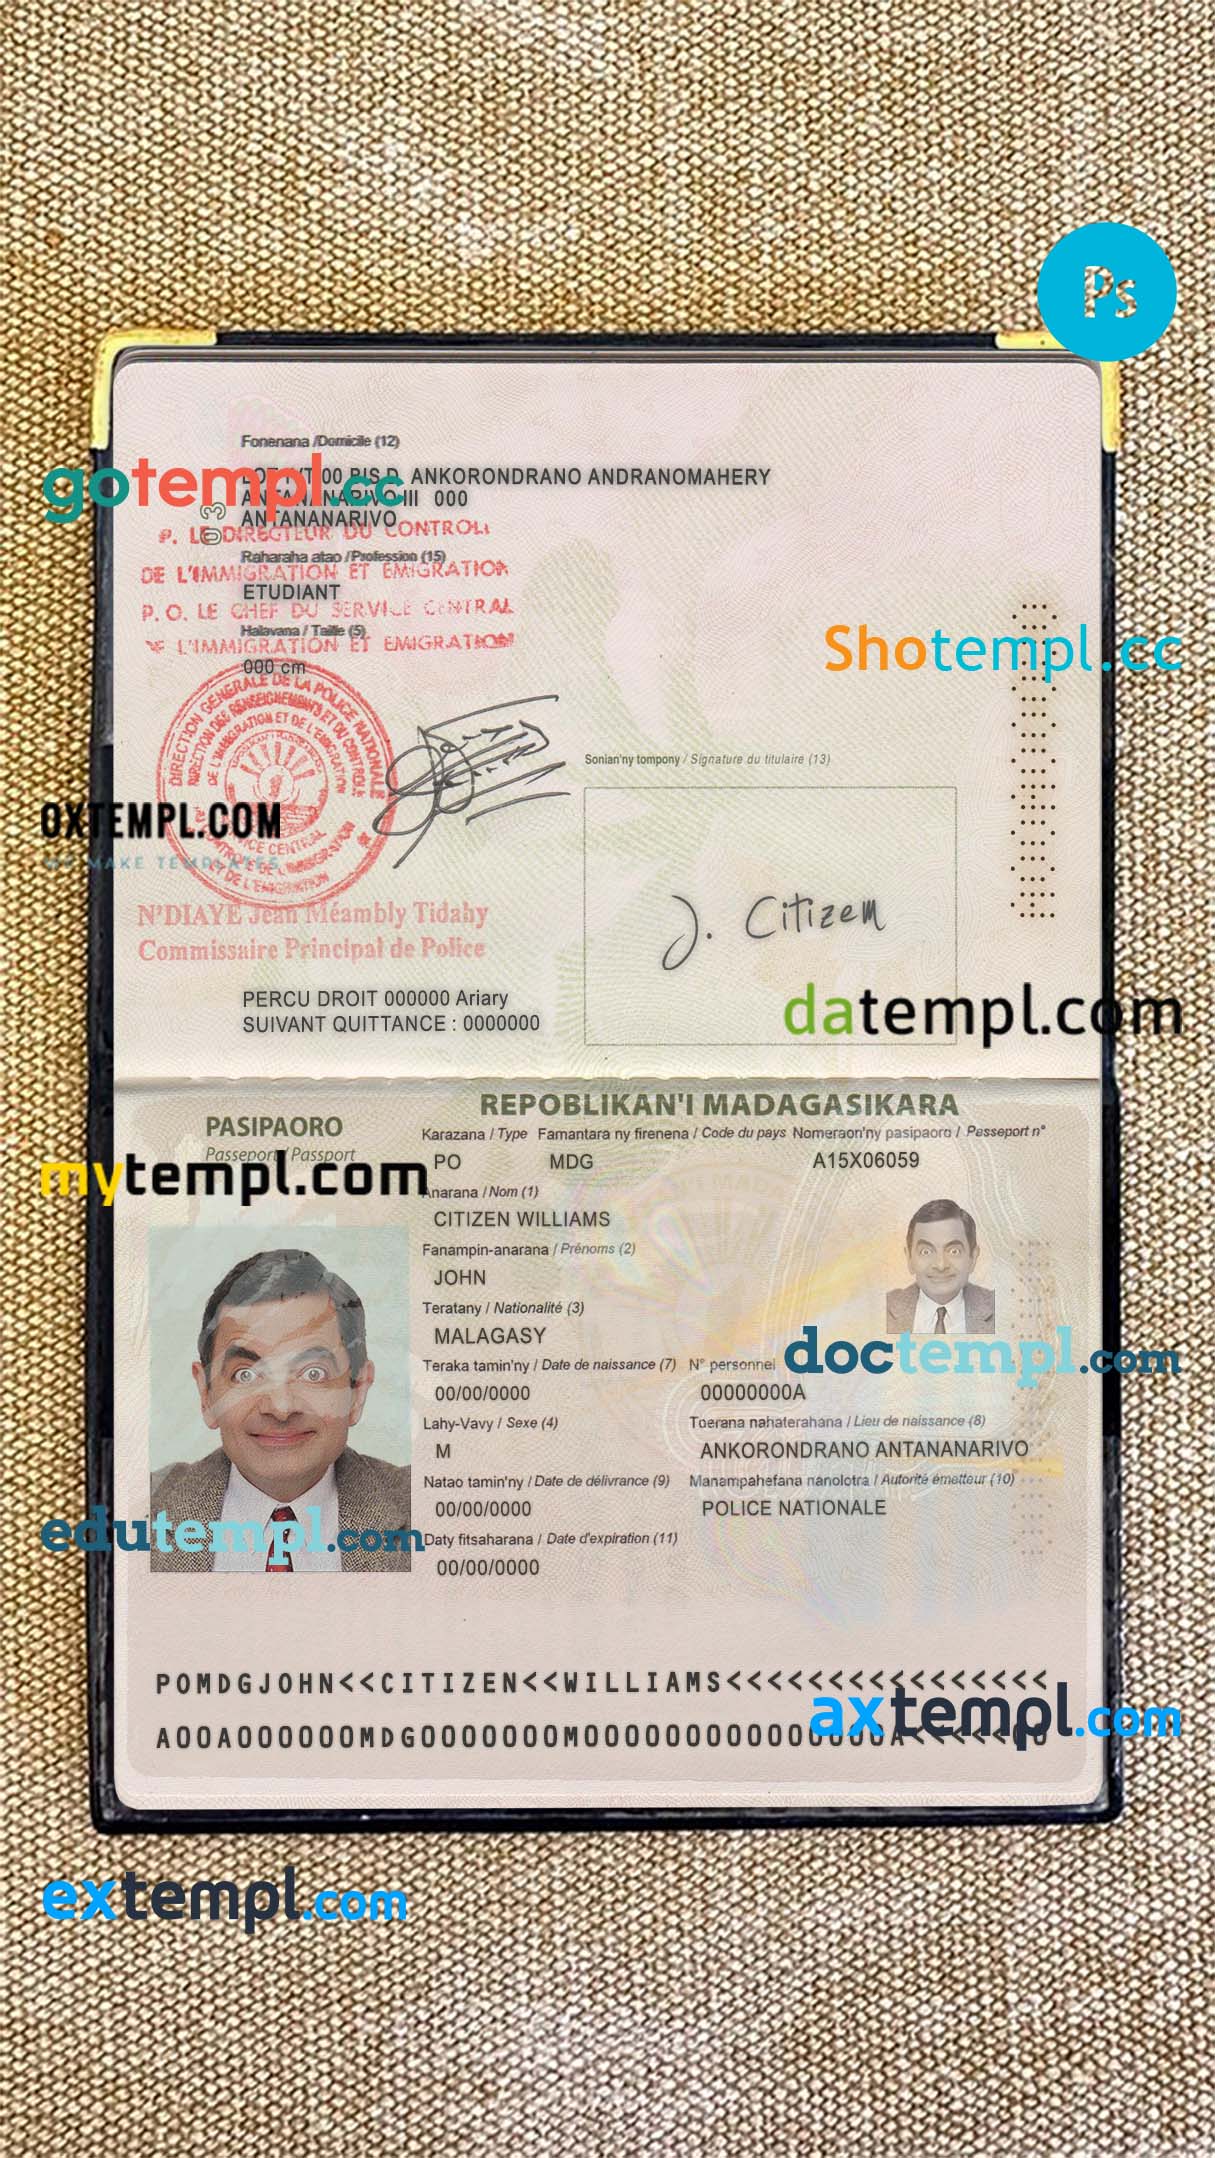 Oman bank Nizwa mastercard, fully editable template in PSD format